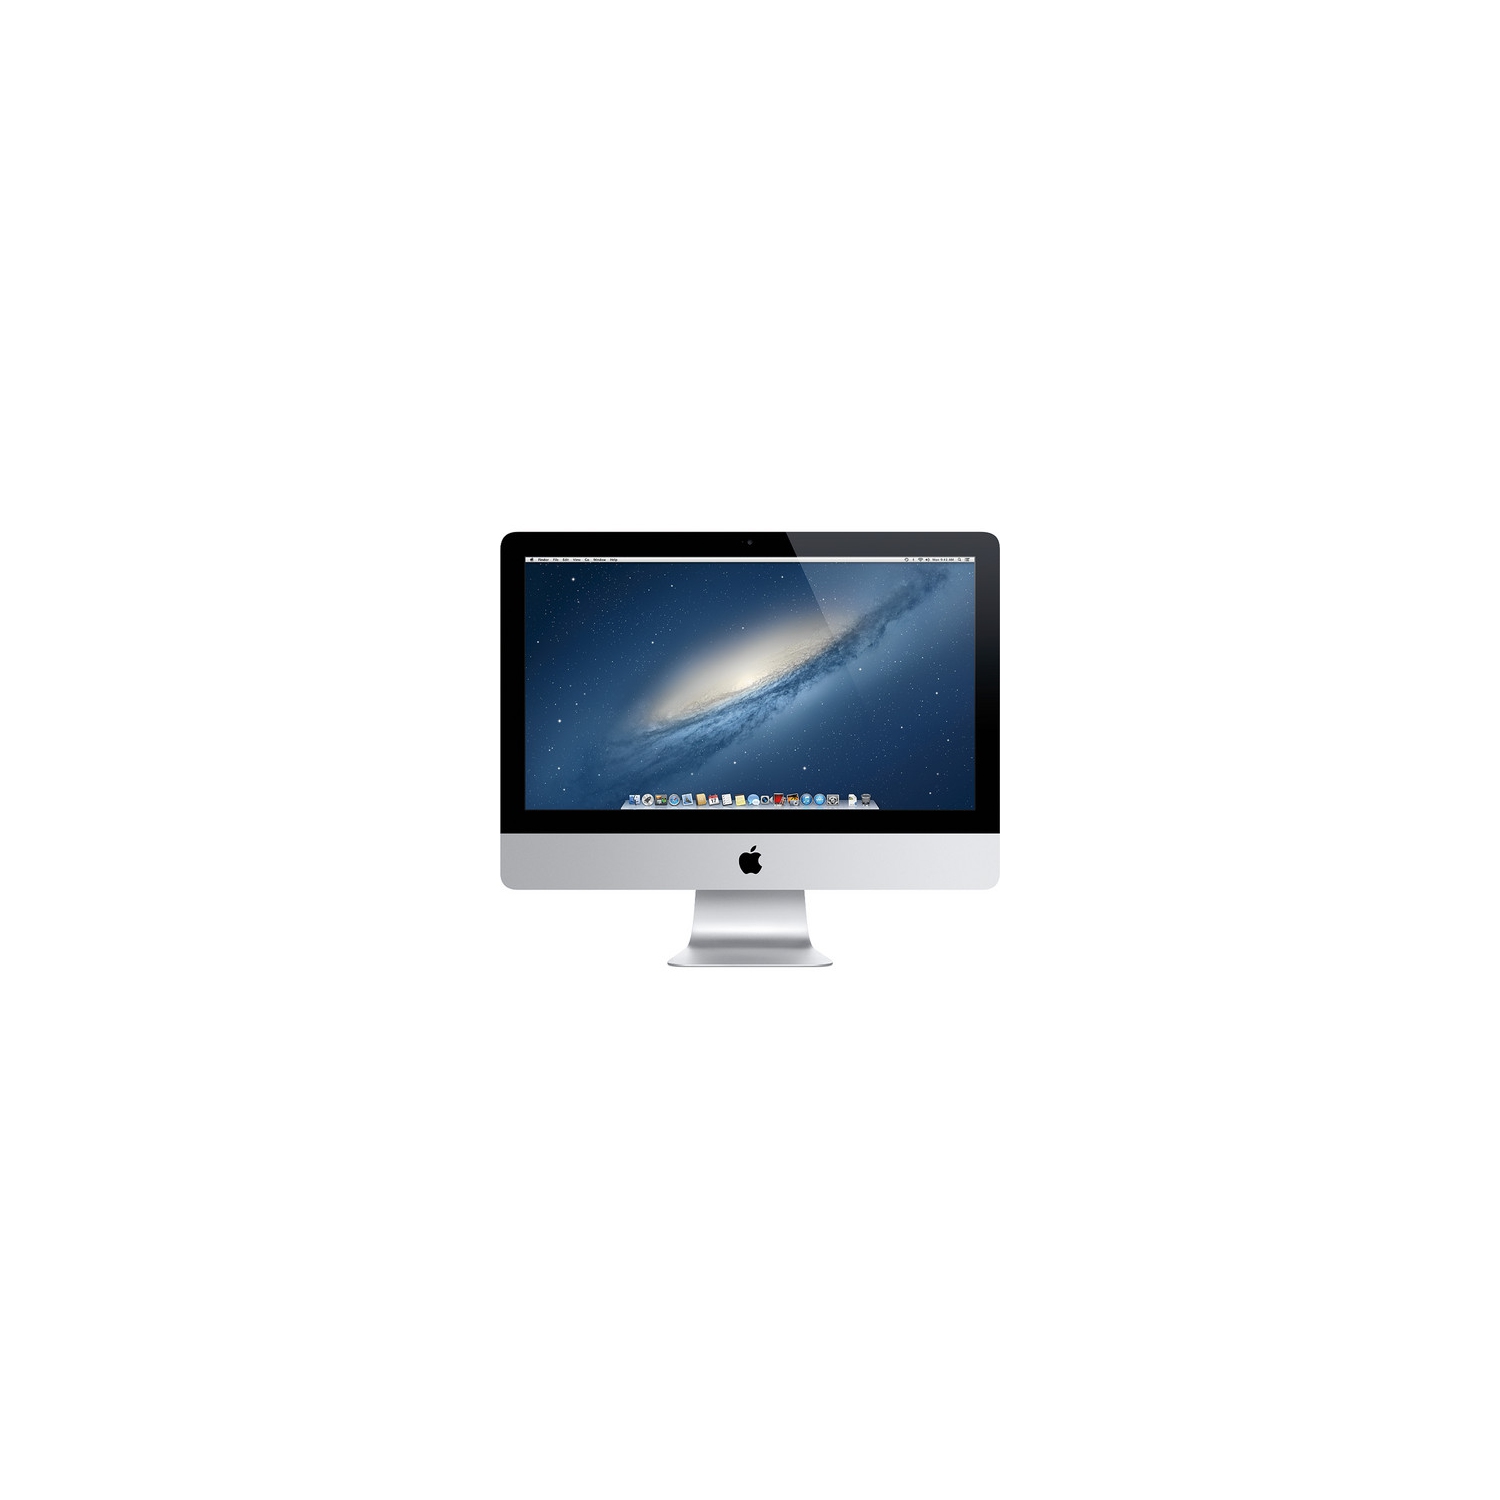 Refurbished (Good) - Apple 21.5" (MD093LL/A) iMac Desktop Computer (Core i5/ 1TB HDD/ 8GB RAM)